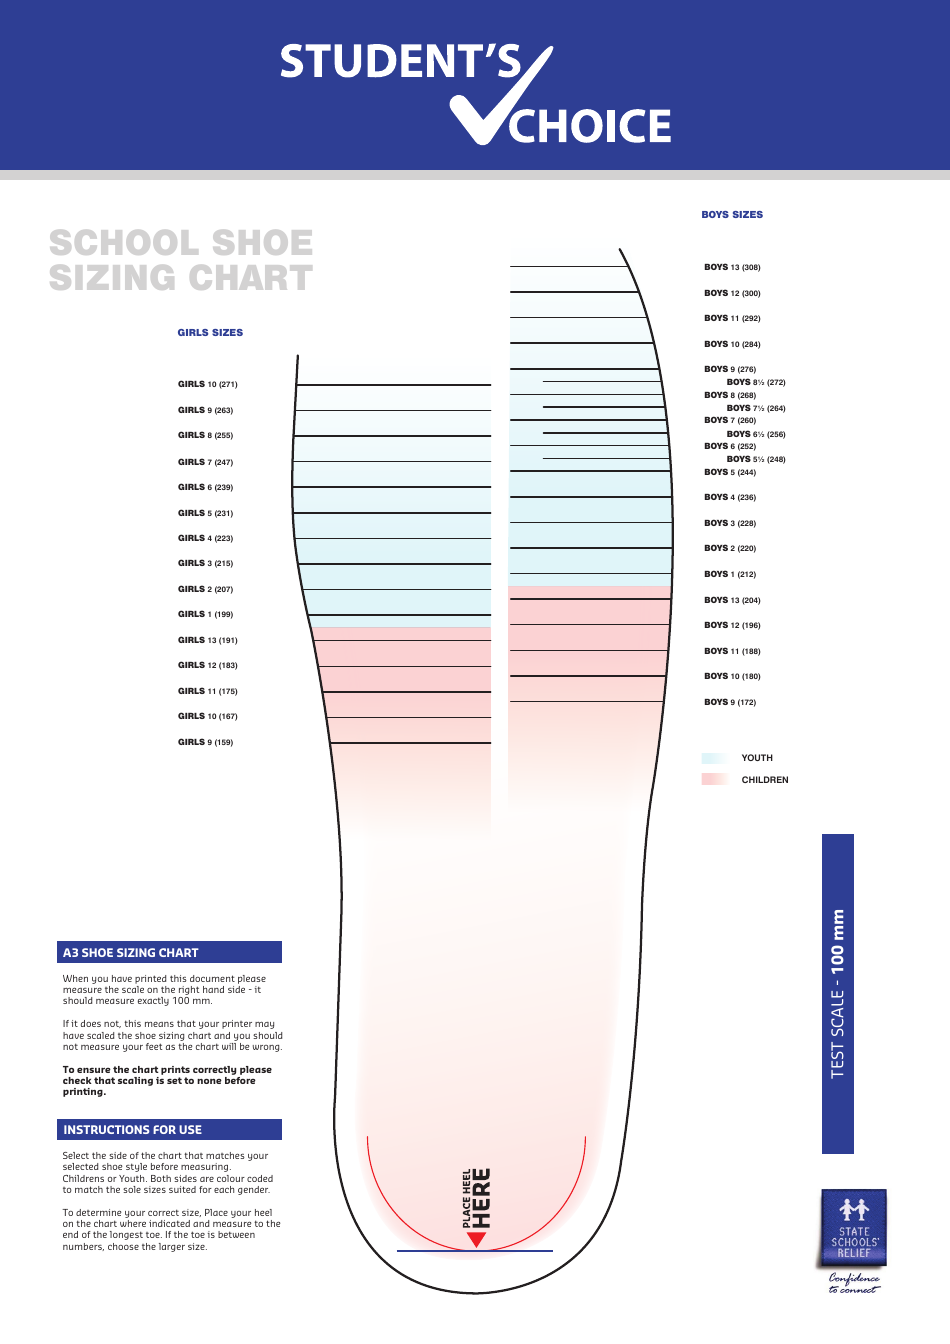 School Shoe Sizing Chart, Page 1